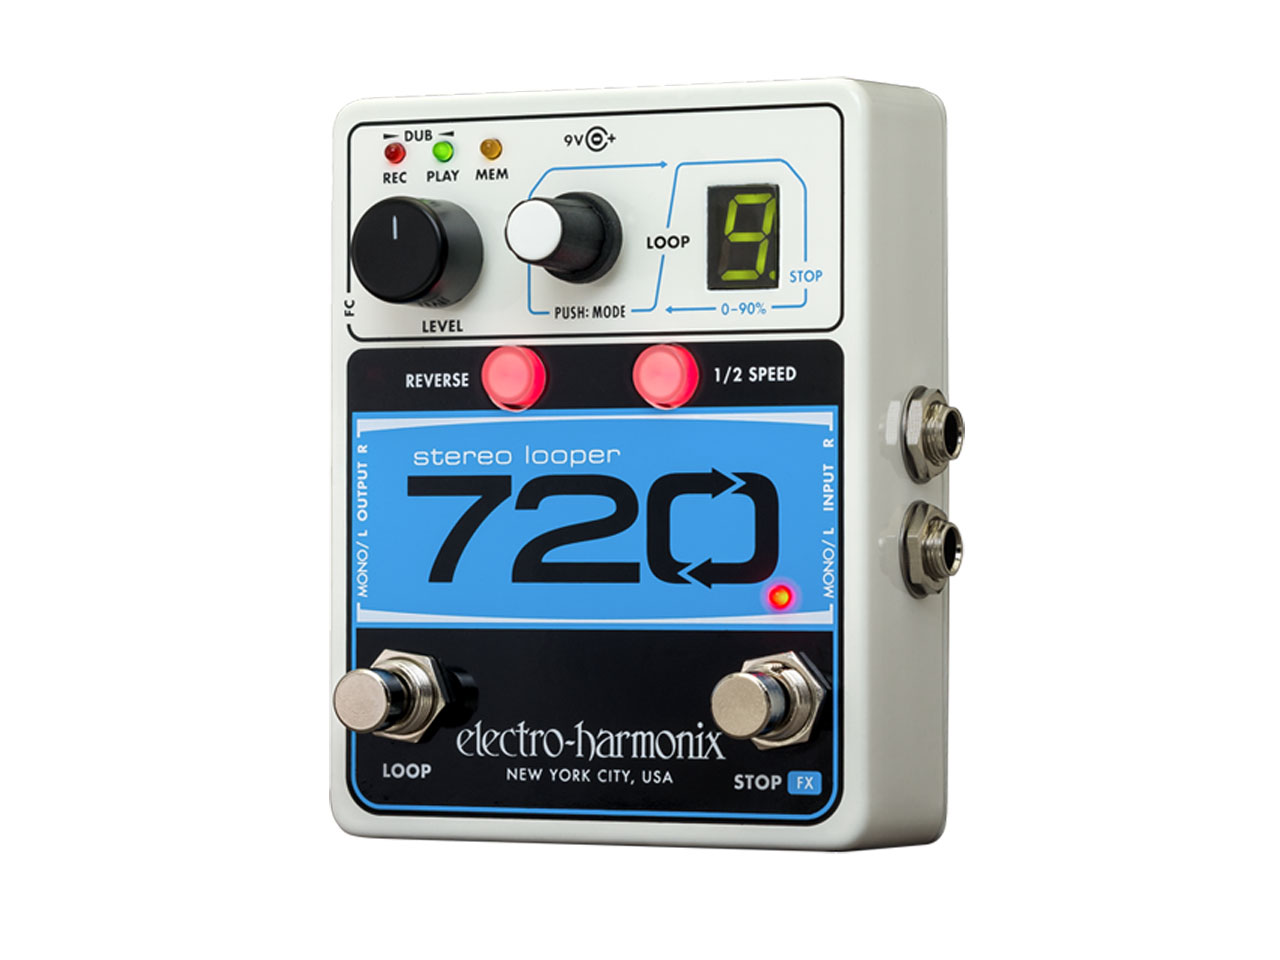 Electro-Harmonix(エレクトロハーモニックス) 720 Stereo Looper Recording Looper (ルーパー)